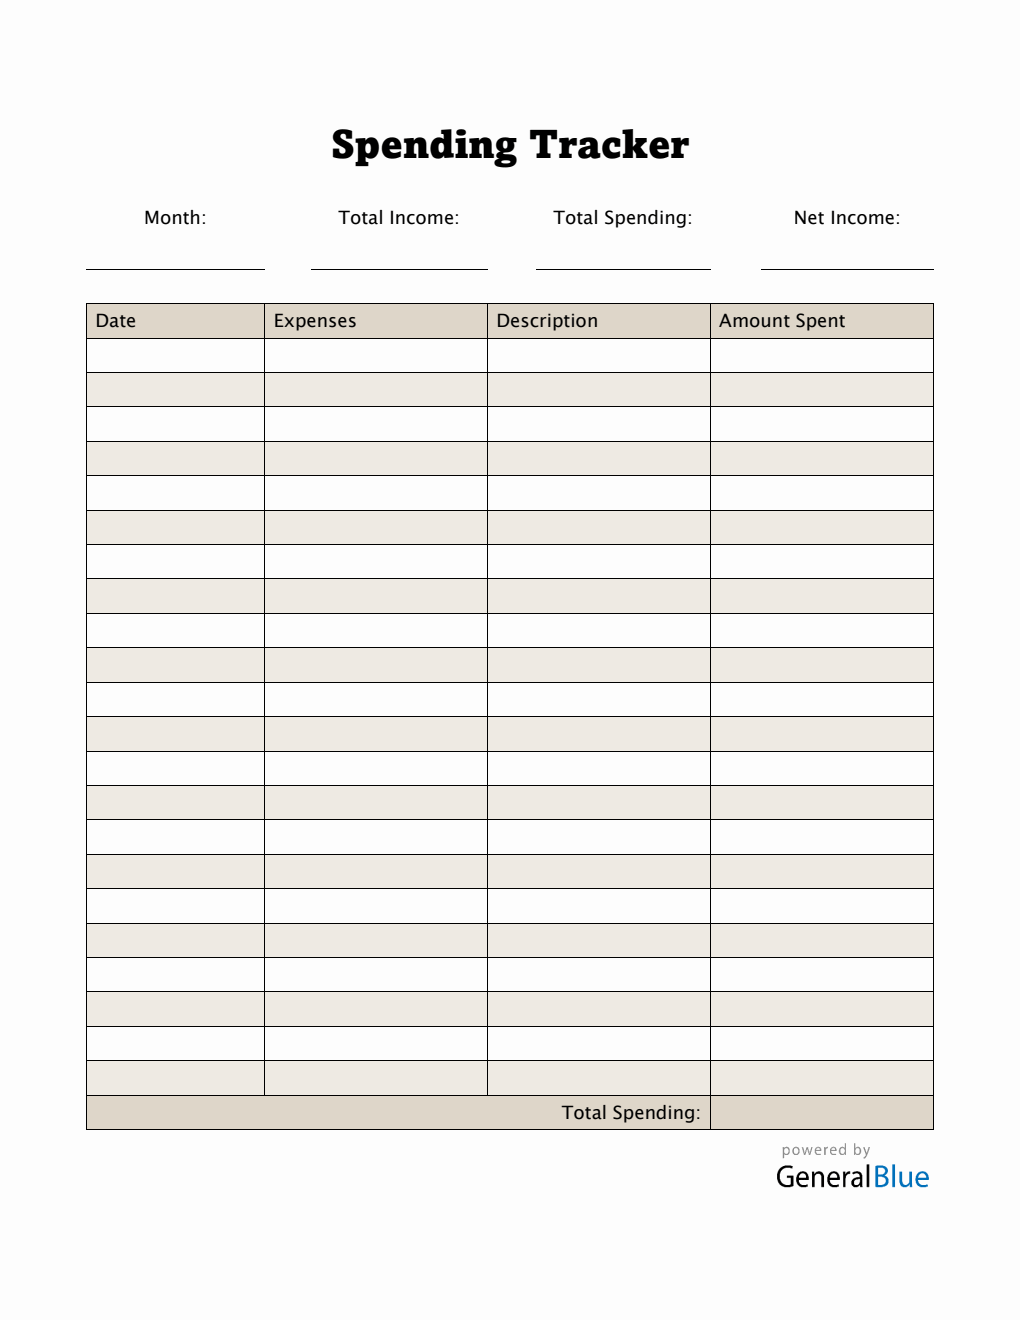 Spending Tracker in Word (Striped)